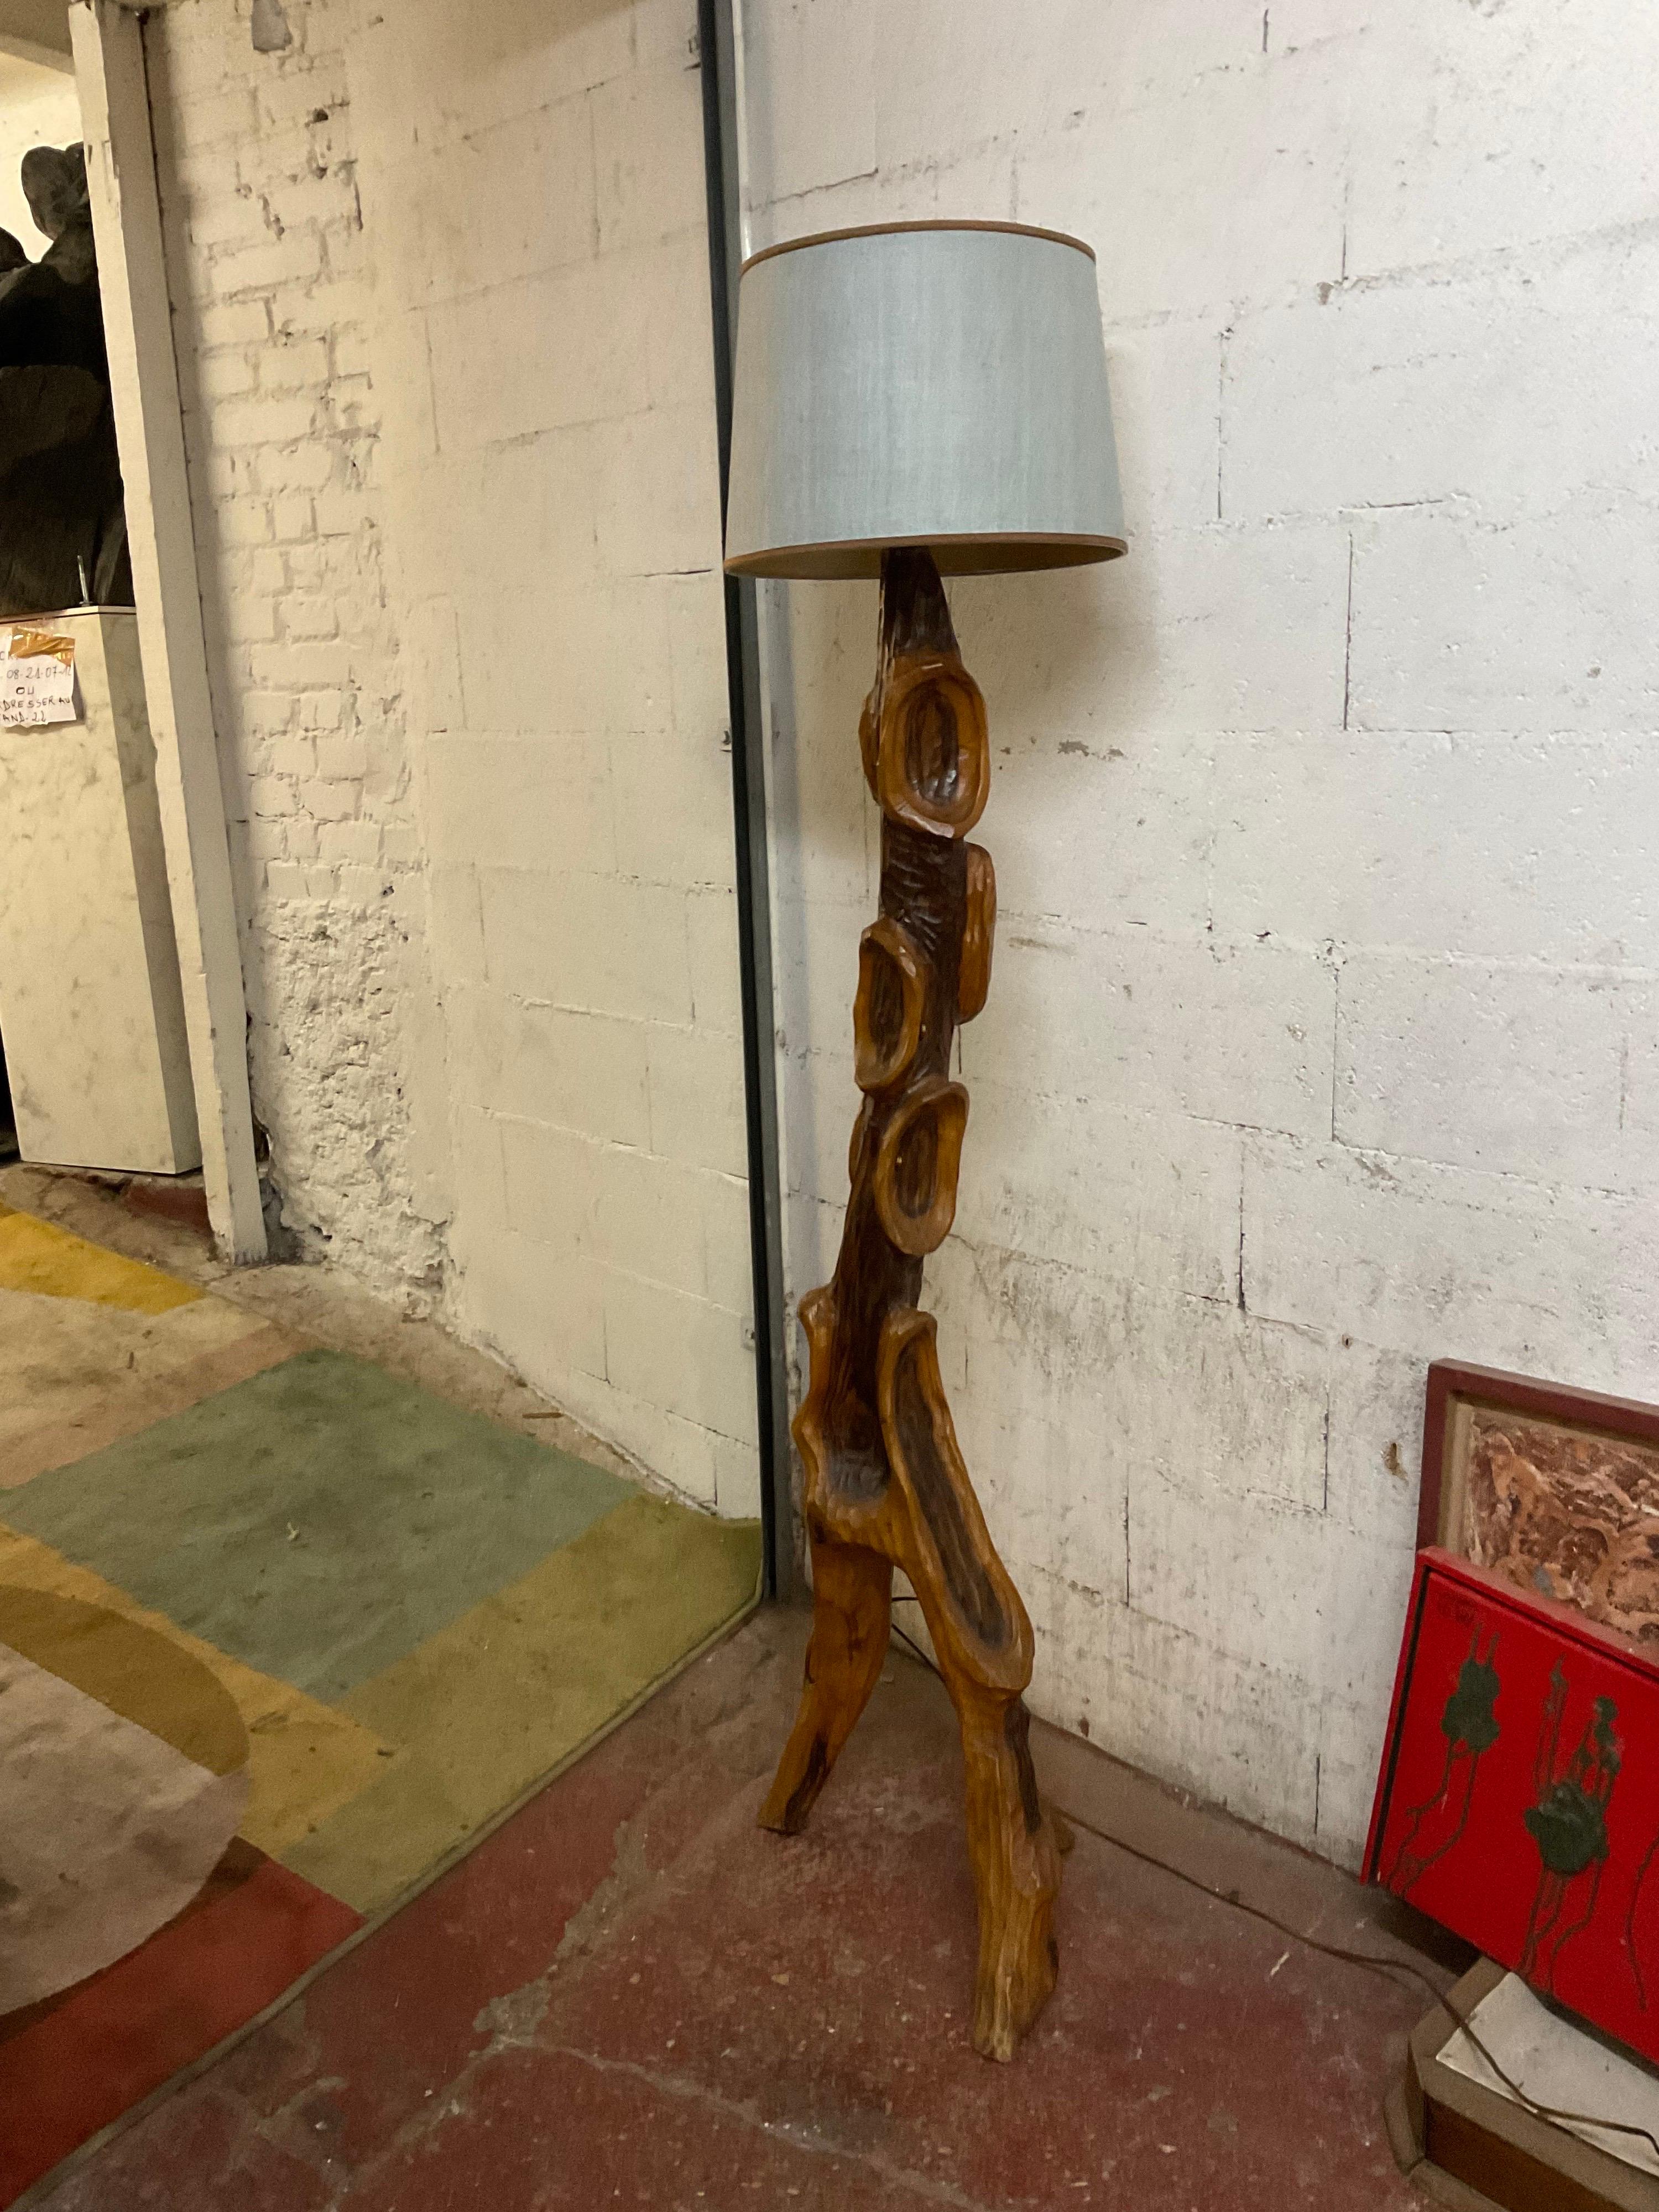 An olive floor lamp not original shade.